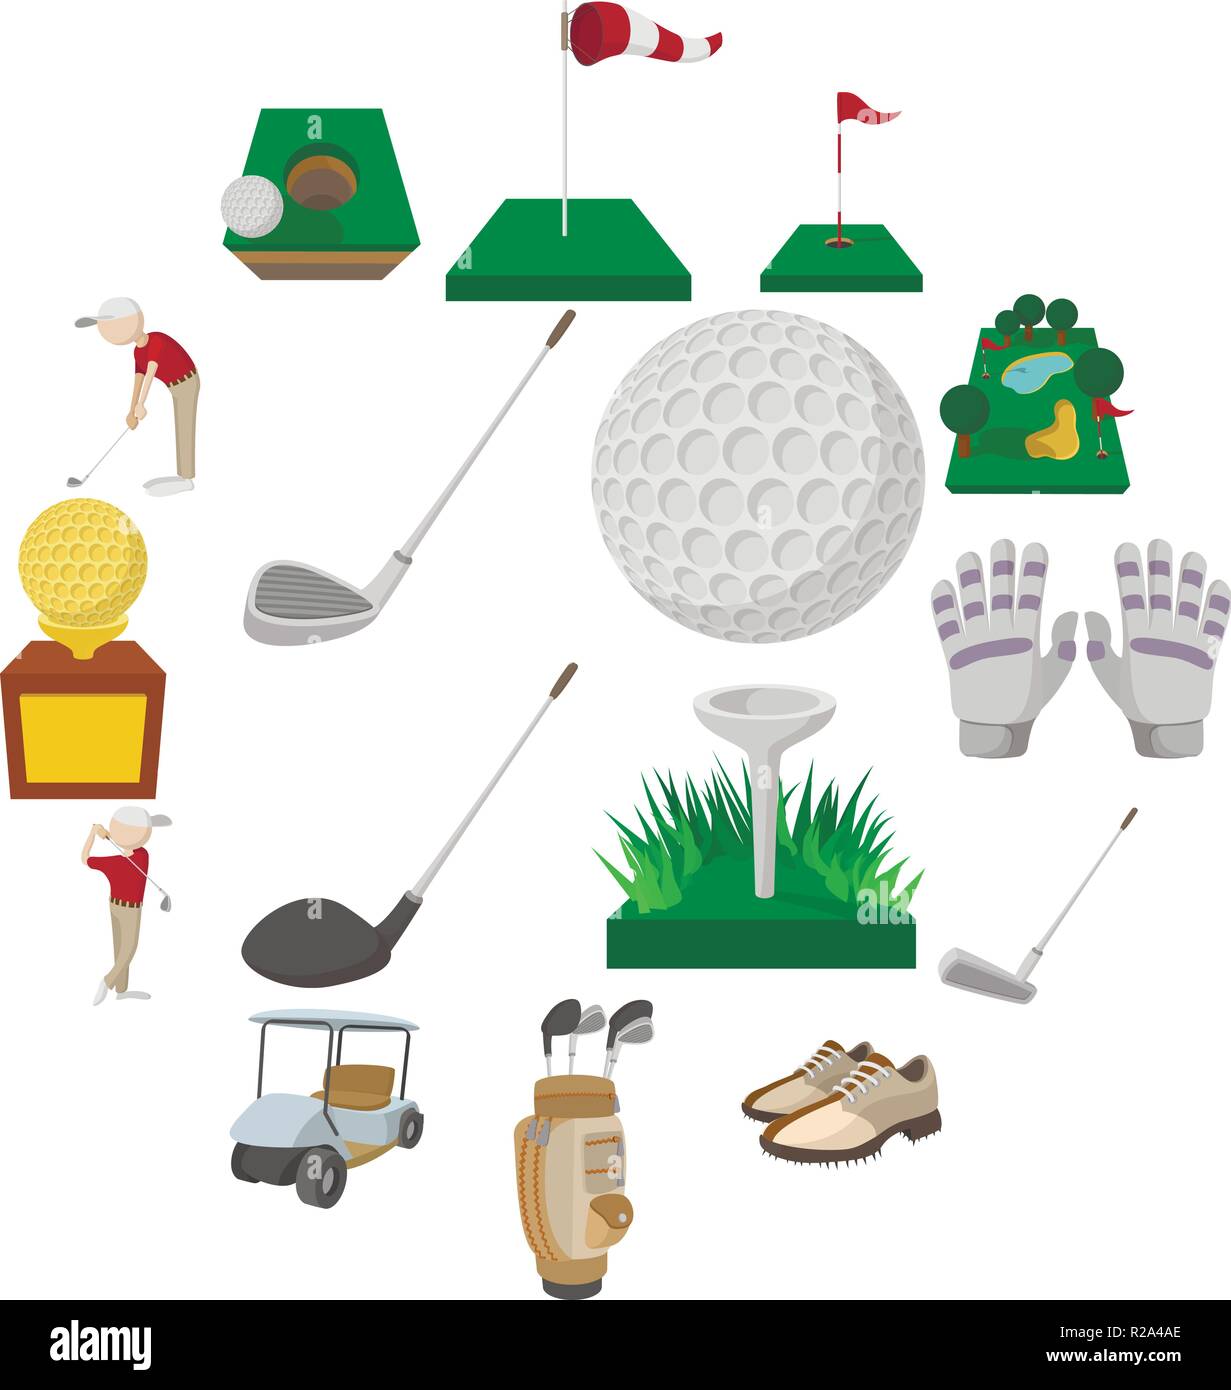 1,600+ Golf Clubs Cartoons Stock Illustrations, Royalty-Free